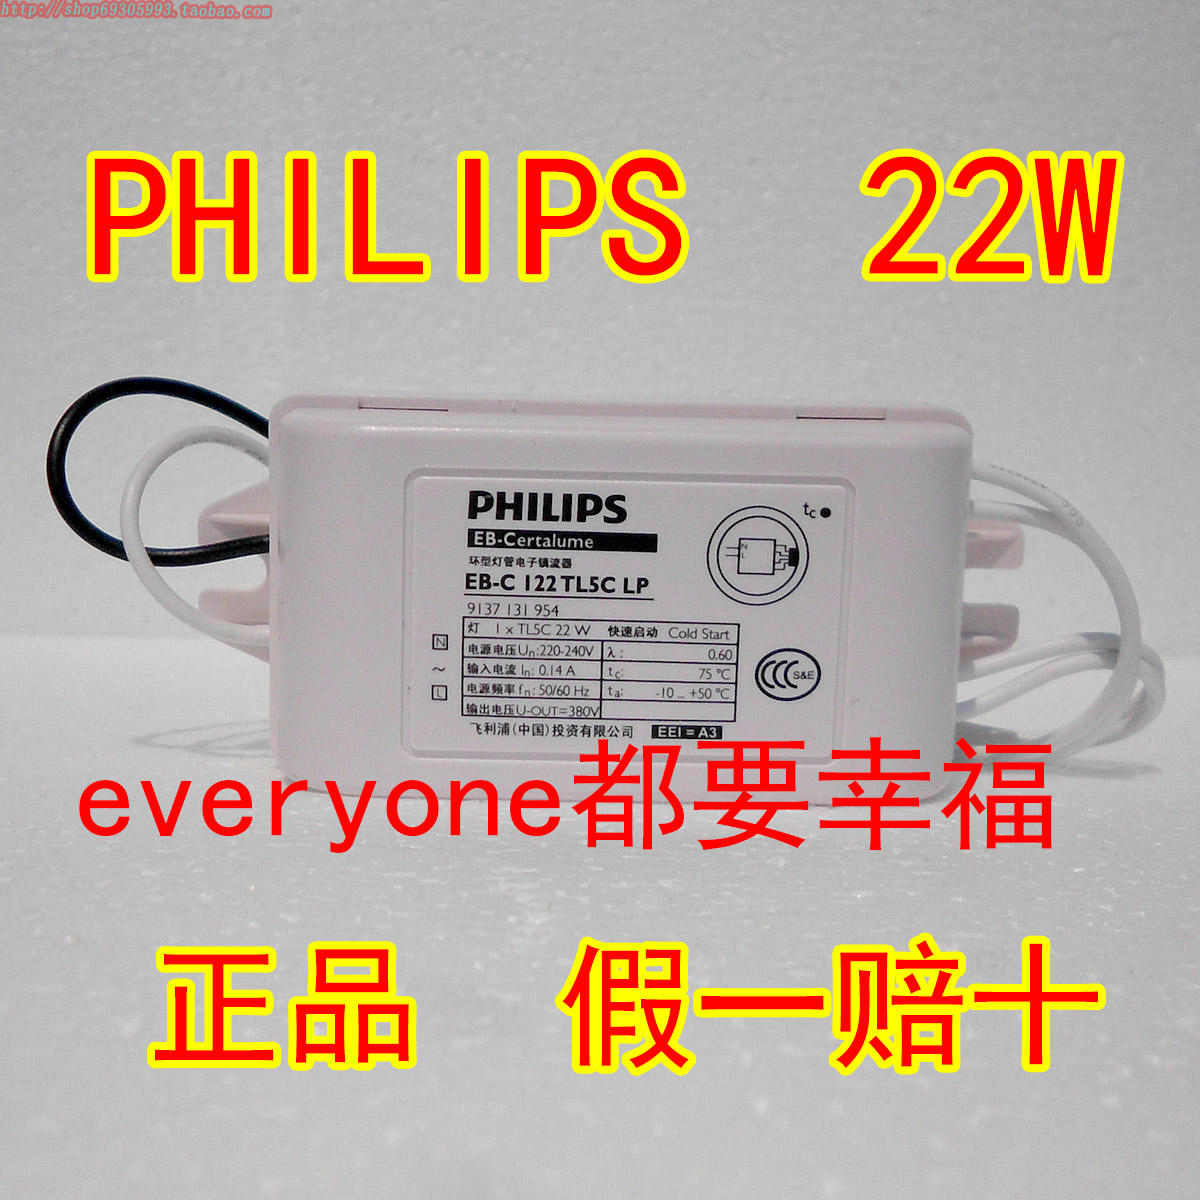 PHILIPS飞利浦22W环形灯管T5吸顶32电子镇流器EB-C 122TL5C日光40